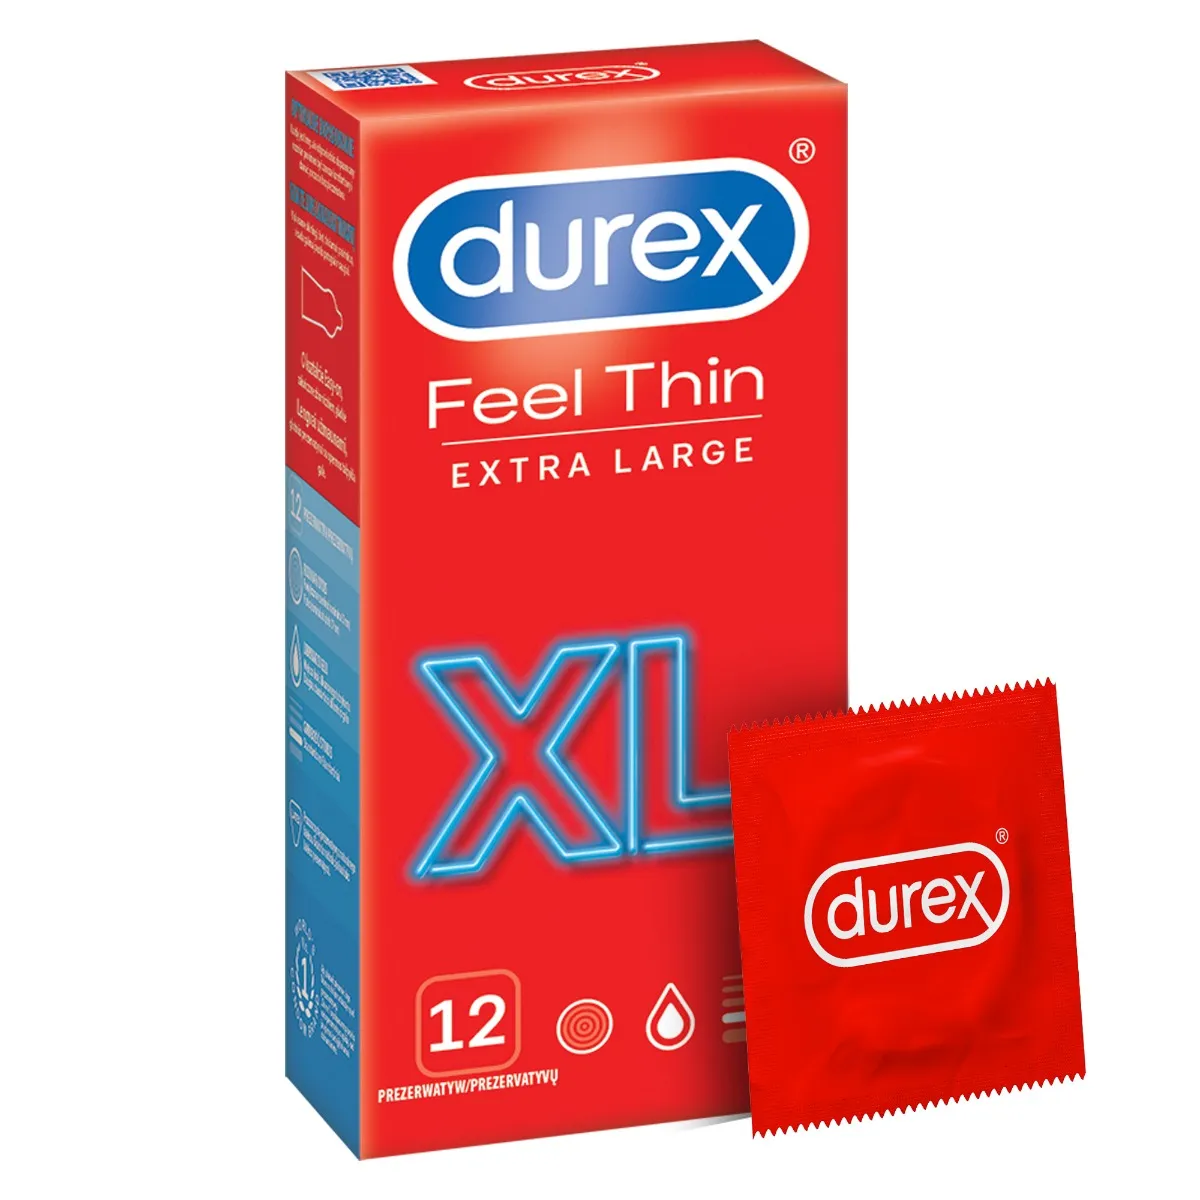 Durex Feel Thin XL prezerwatywy, 12 szt. 